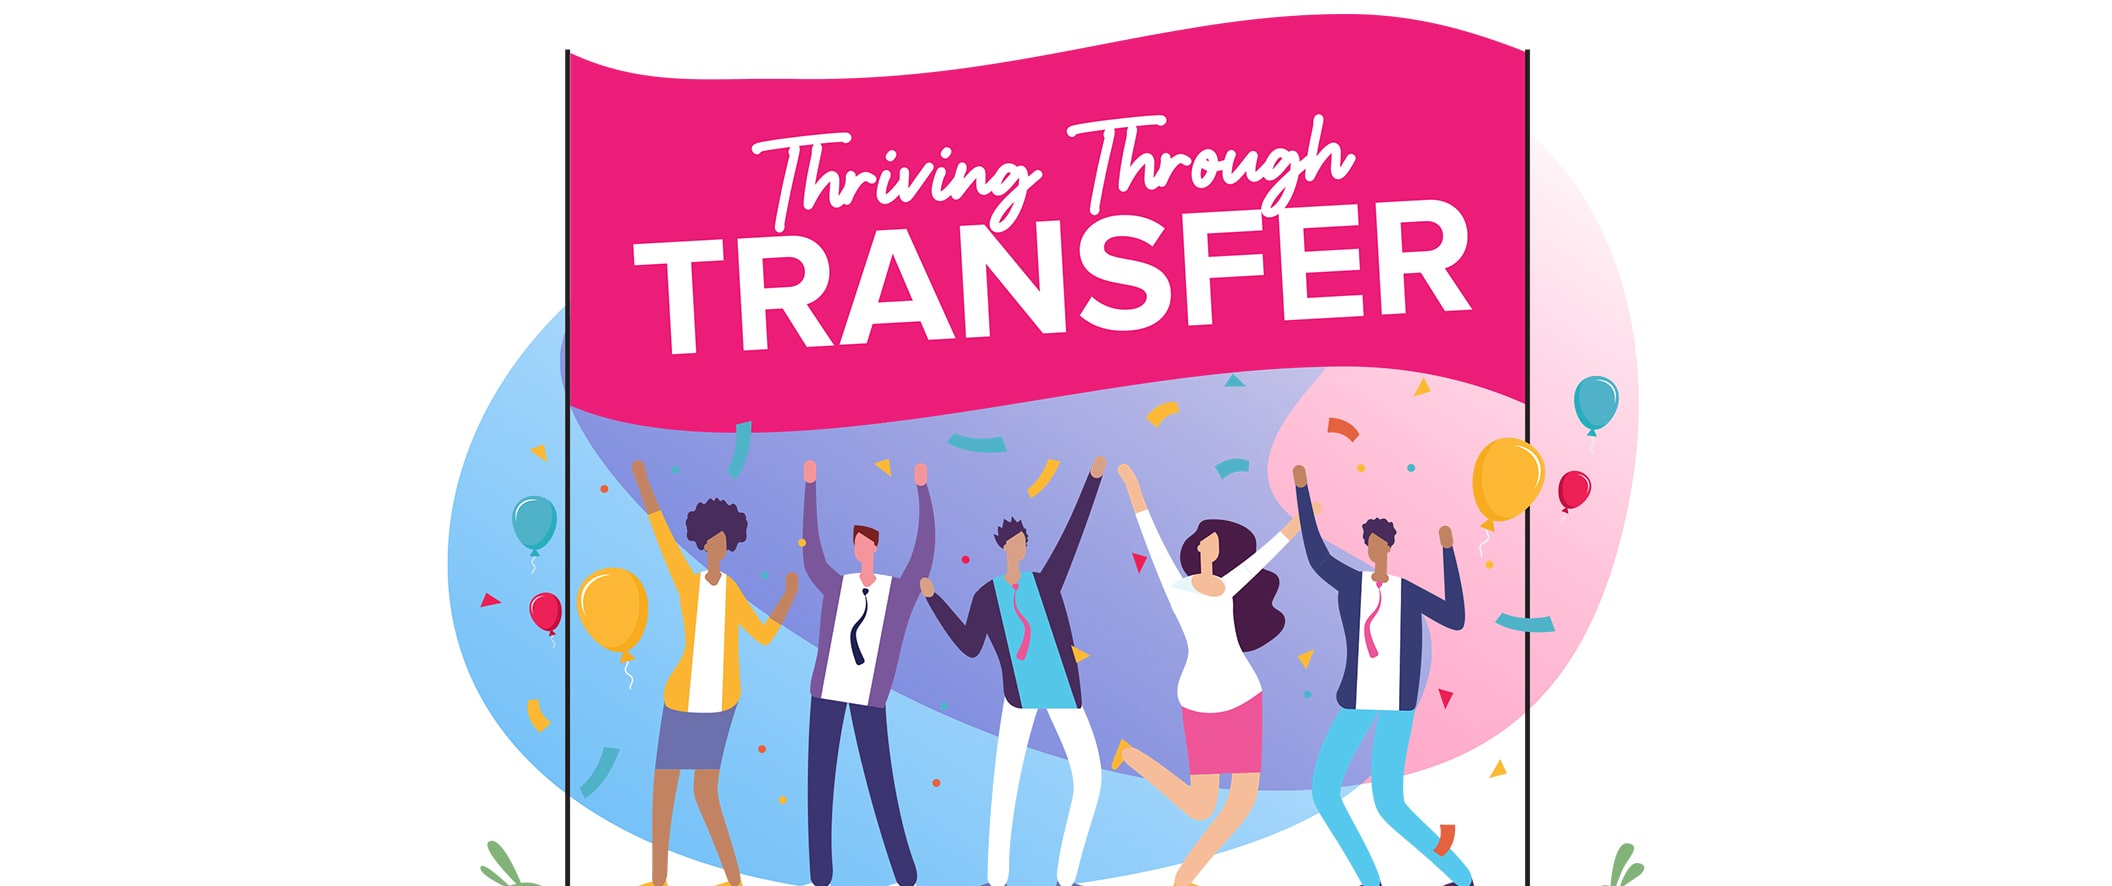 students under "Thriving Through Transfer" benner